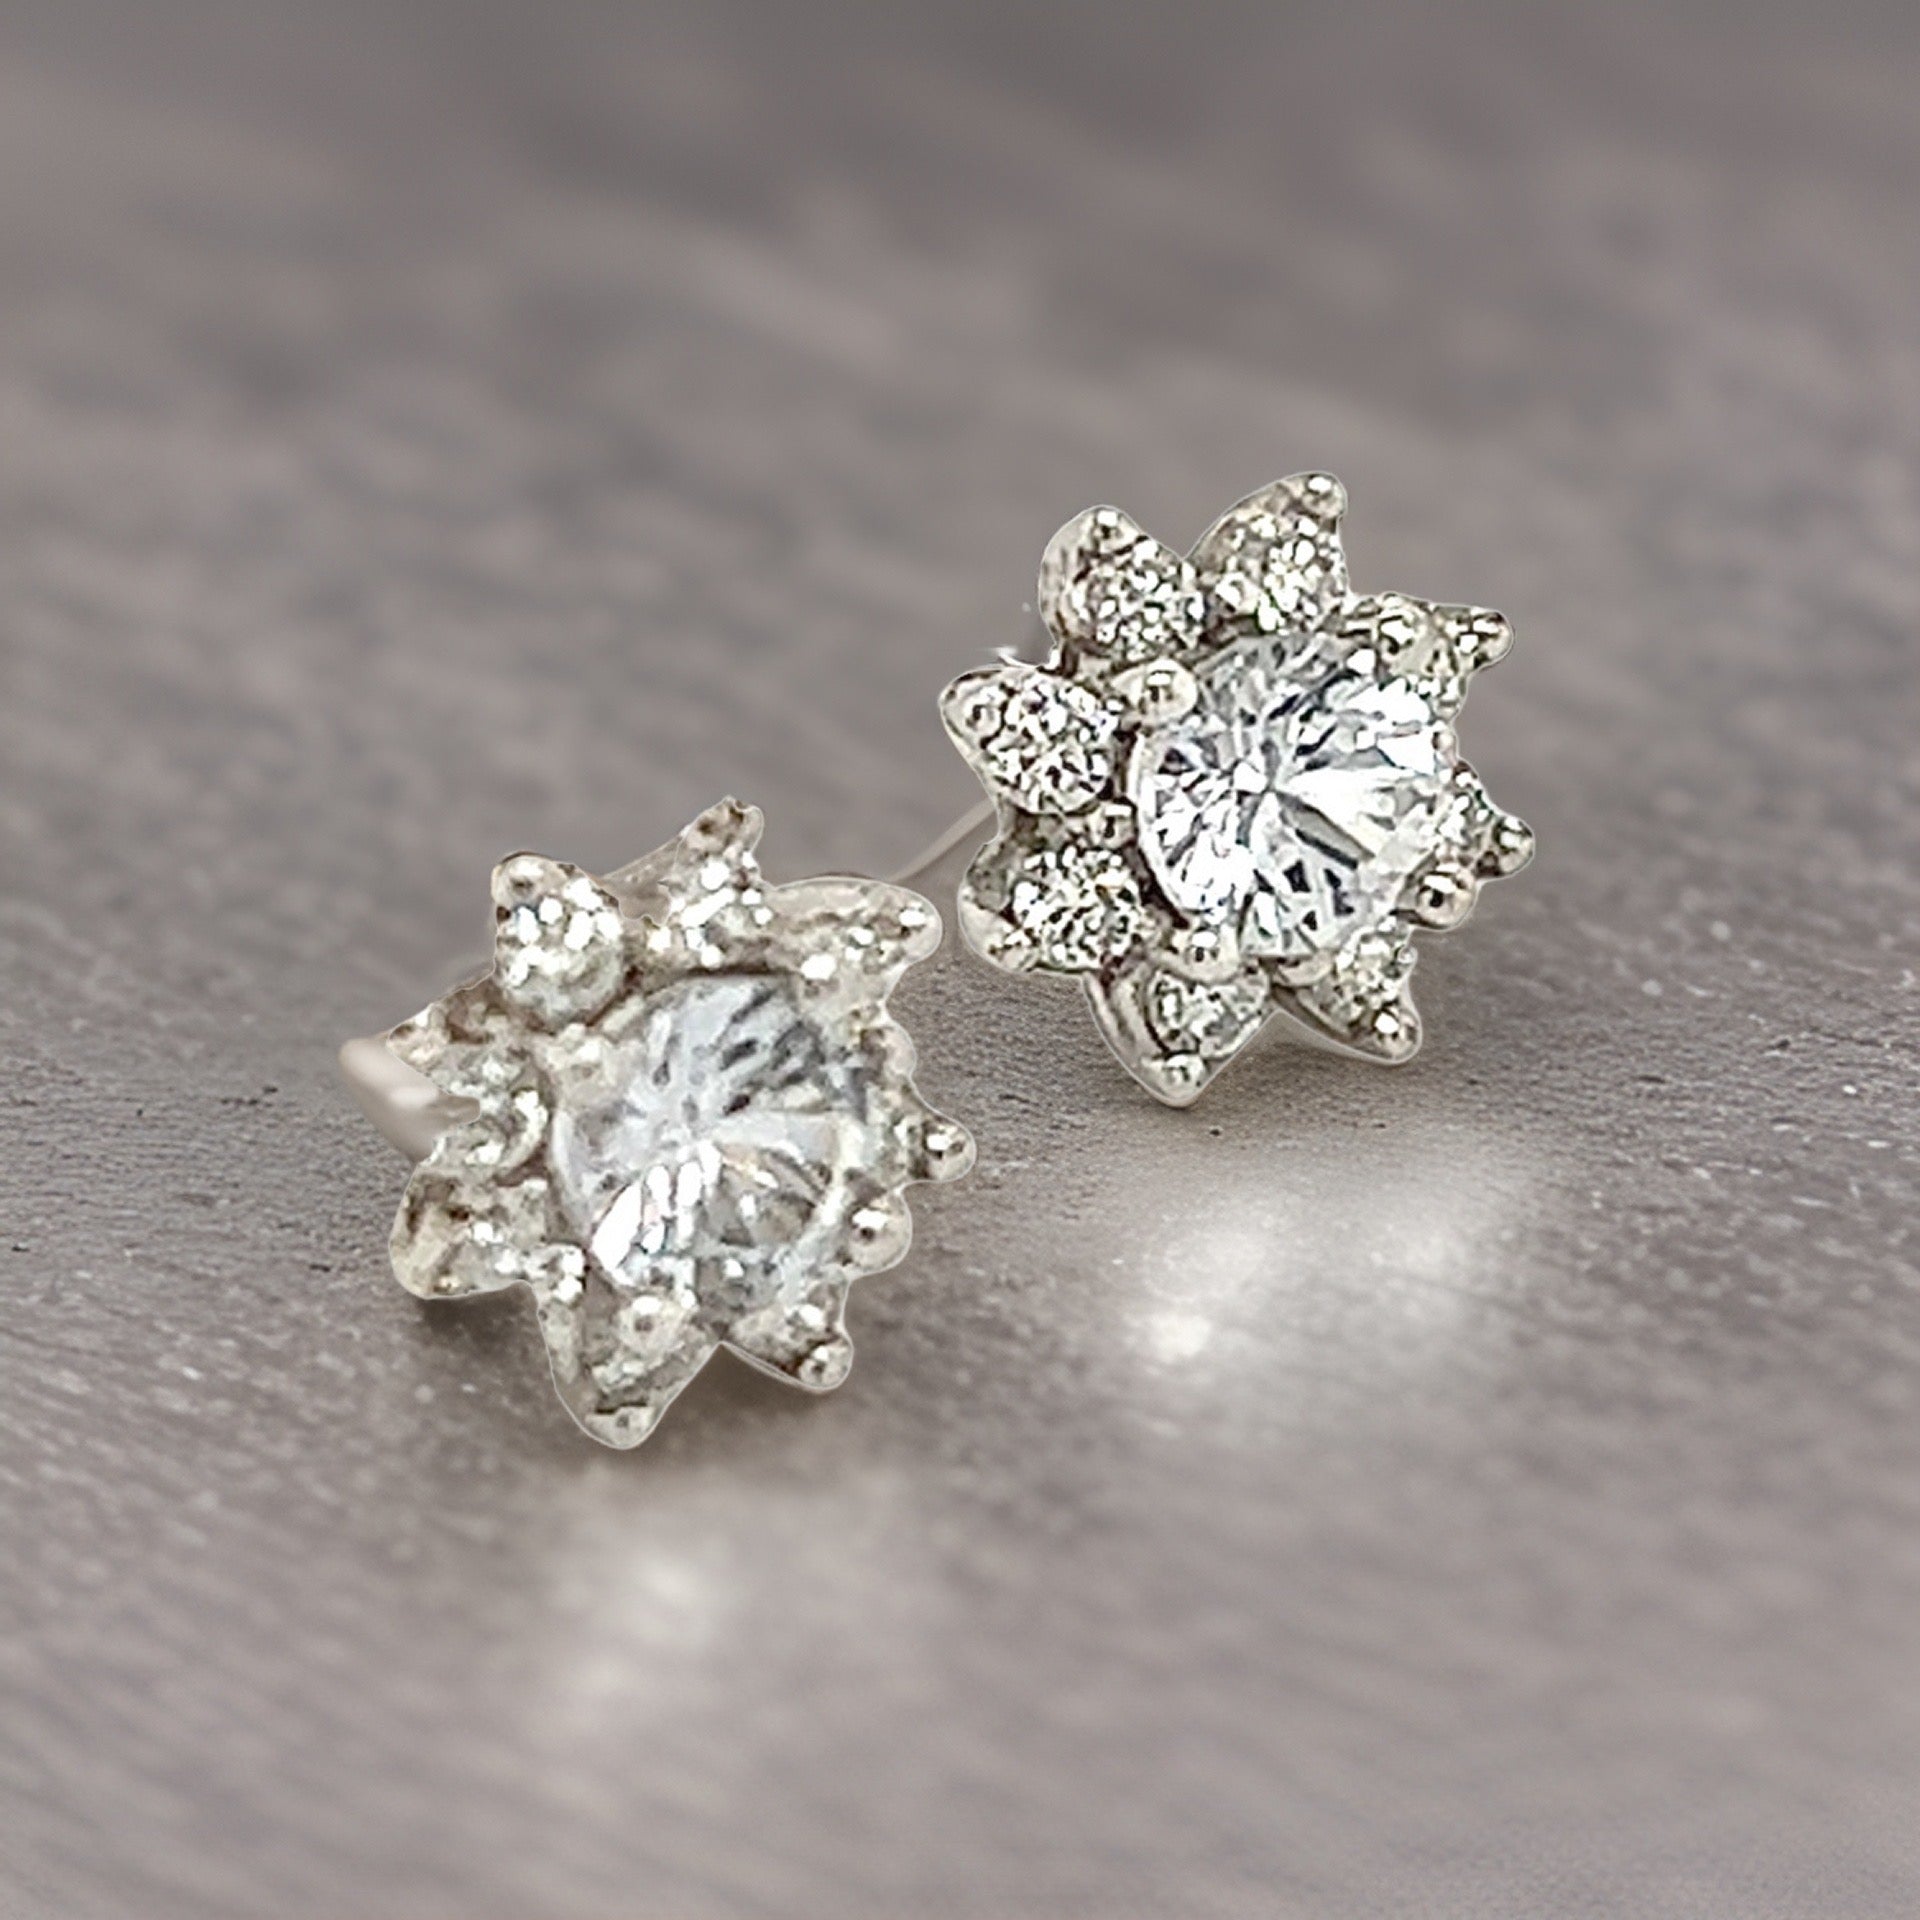 Natural Sapphire Diamond Halo Stud Earrings 14k Gold 1.02 TCW Certified $3,950 121426 - Certified Fine Jewelry